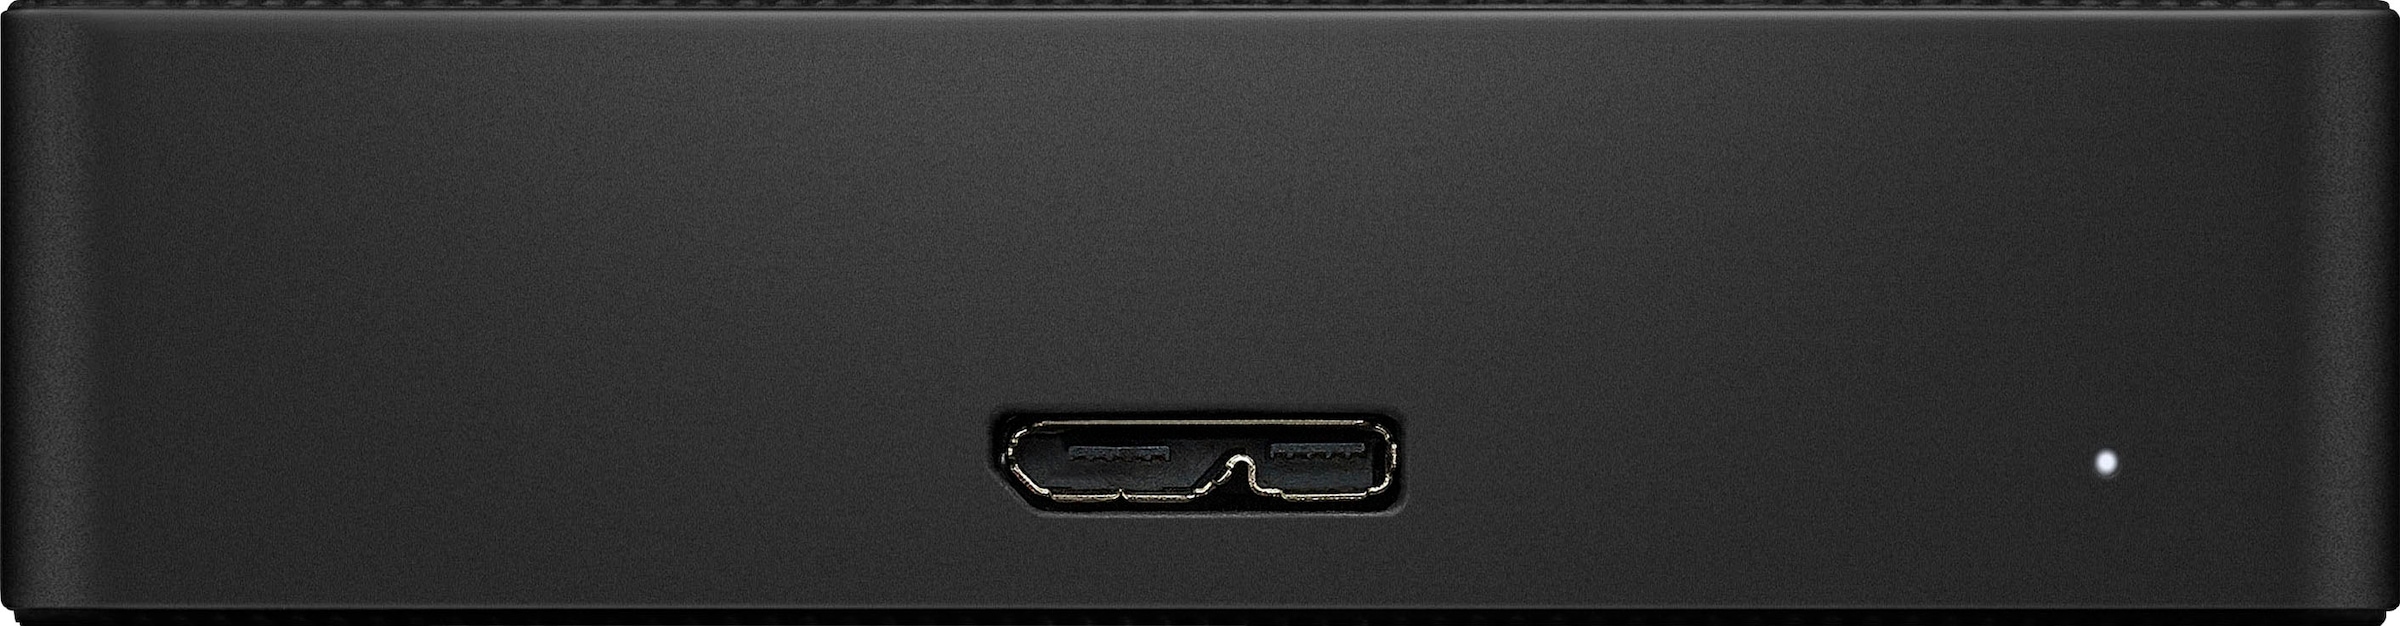 HDD-Festplatte Zoll, Portable«, USB 3.0 Anschluss Seagate externe BAUR 2,5 »Expansion |